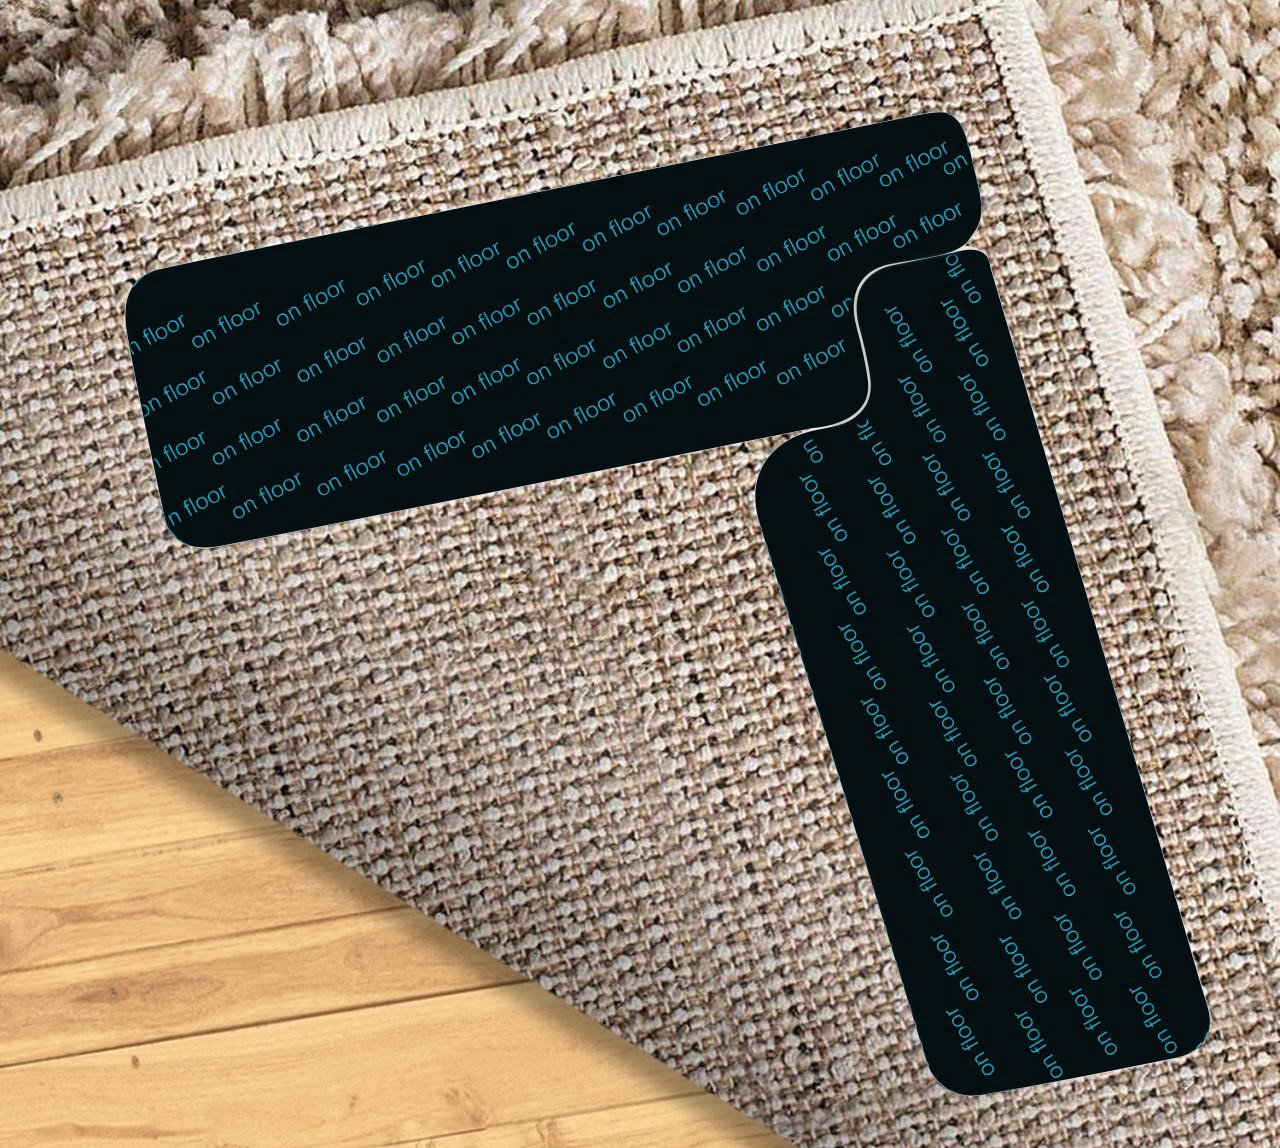 ADHESIVE RUG GRIPPERS Stick On Grip Pads Carpet Mat Corner Holders  Anti-Slip